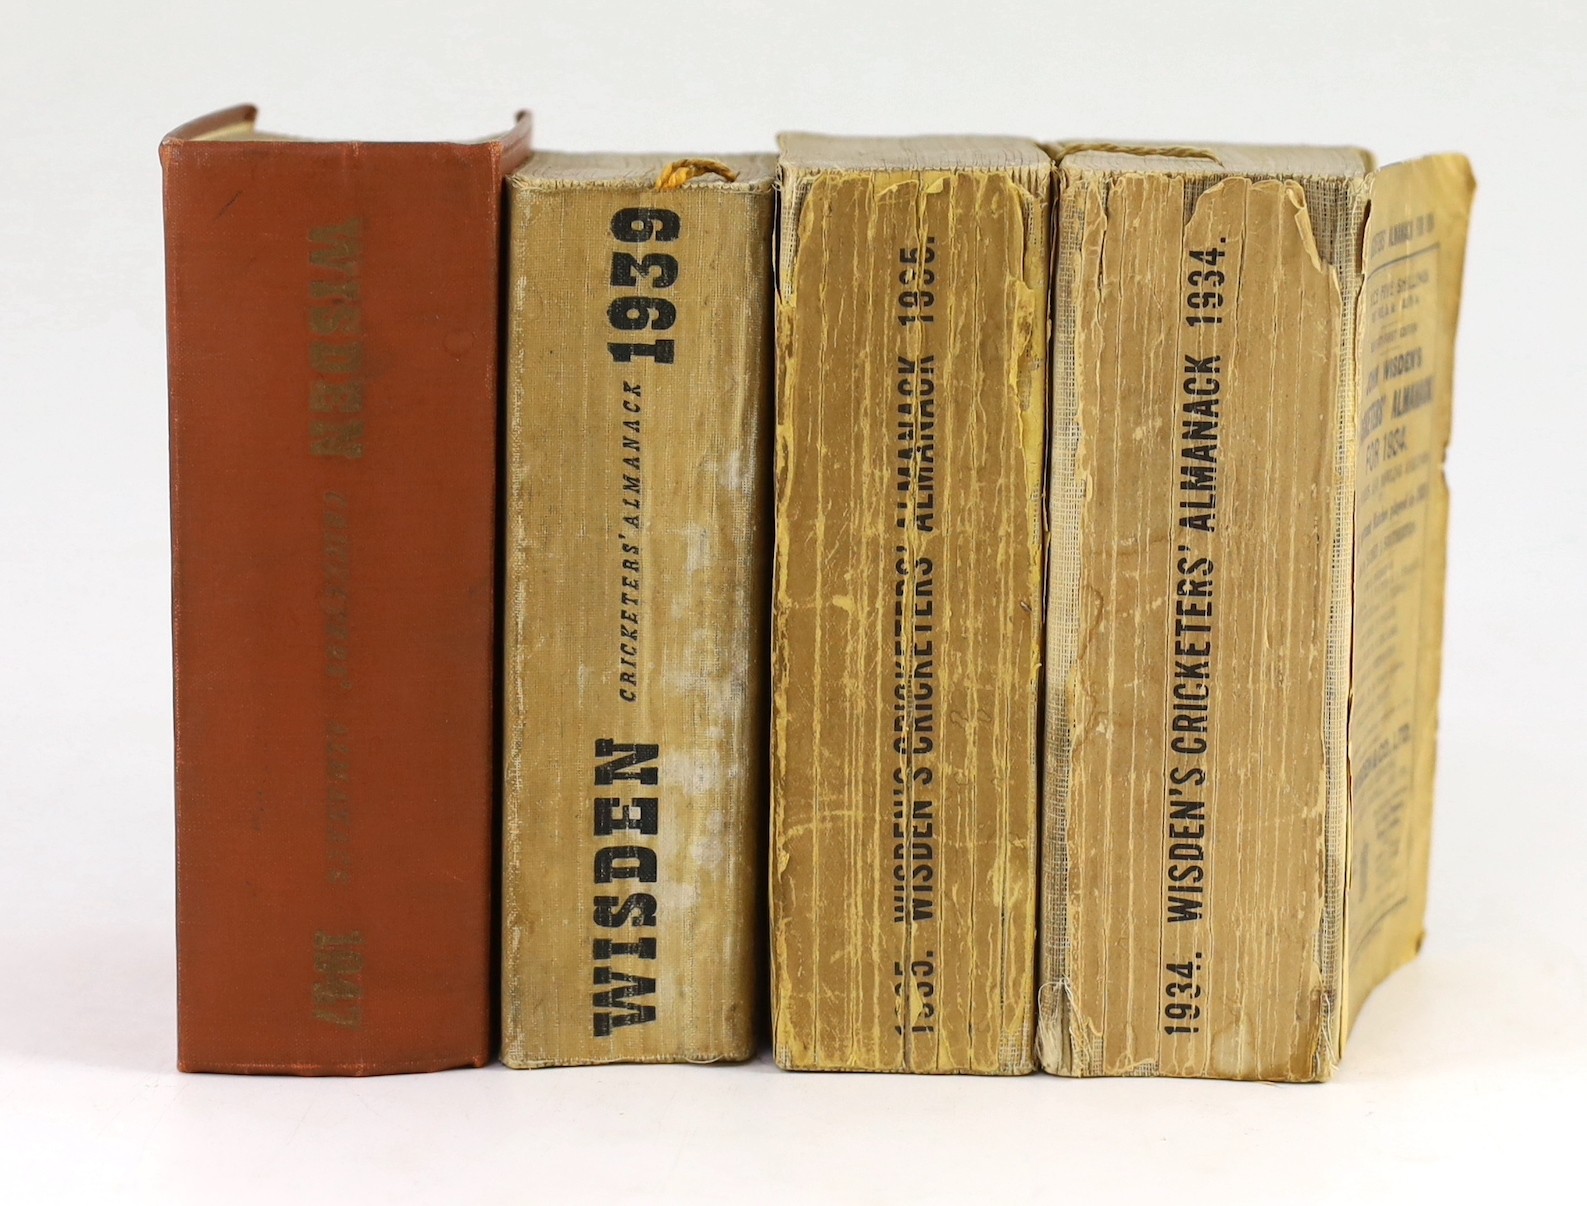 Wisden, John - Cricketers’ Almanack, 3 vols, for 1934-35 and 1939, original wraps, and 1947, original boards (4)